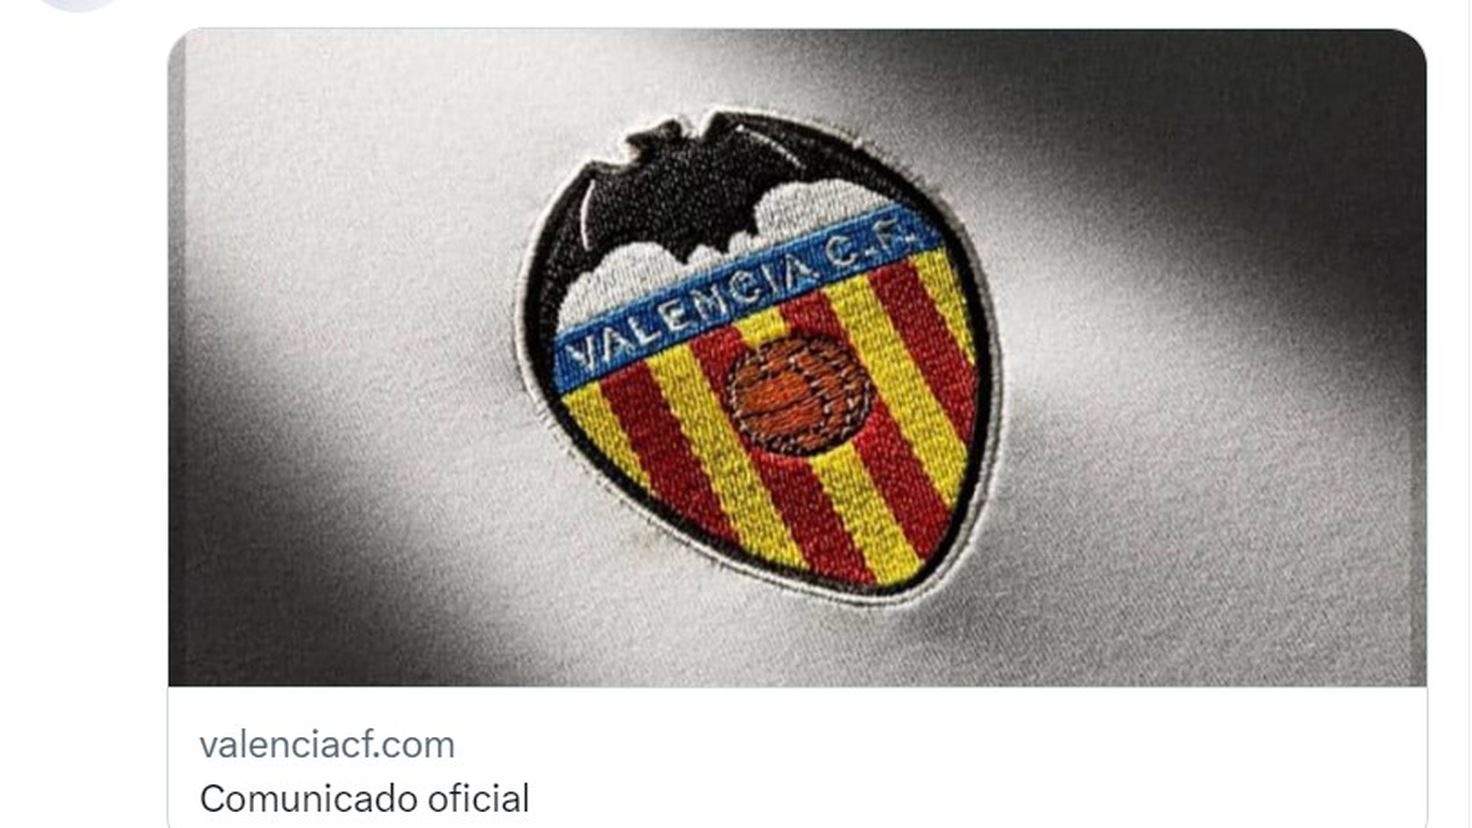 Valencia statement: 